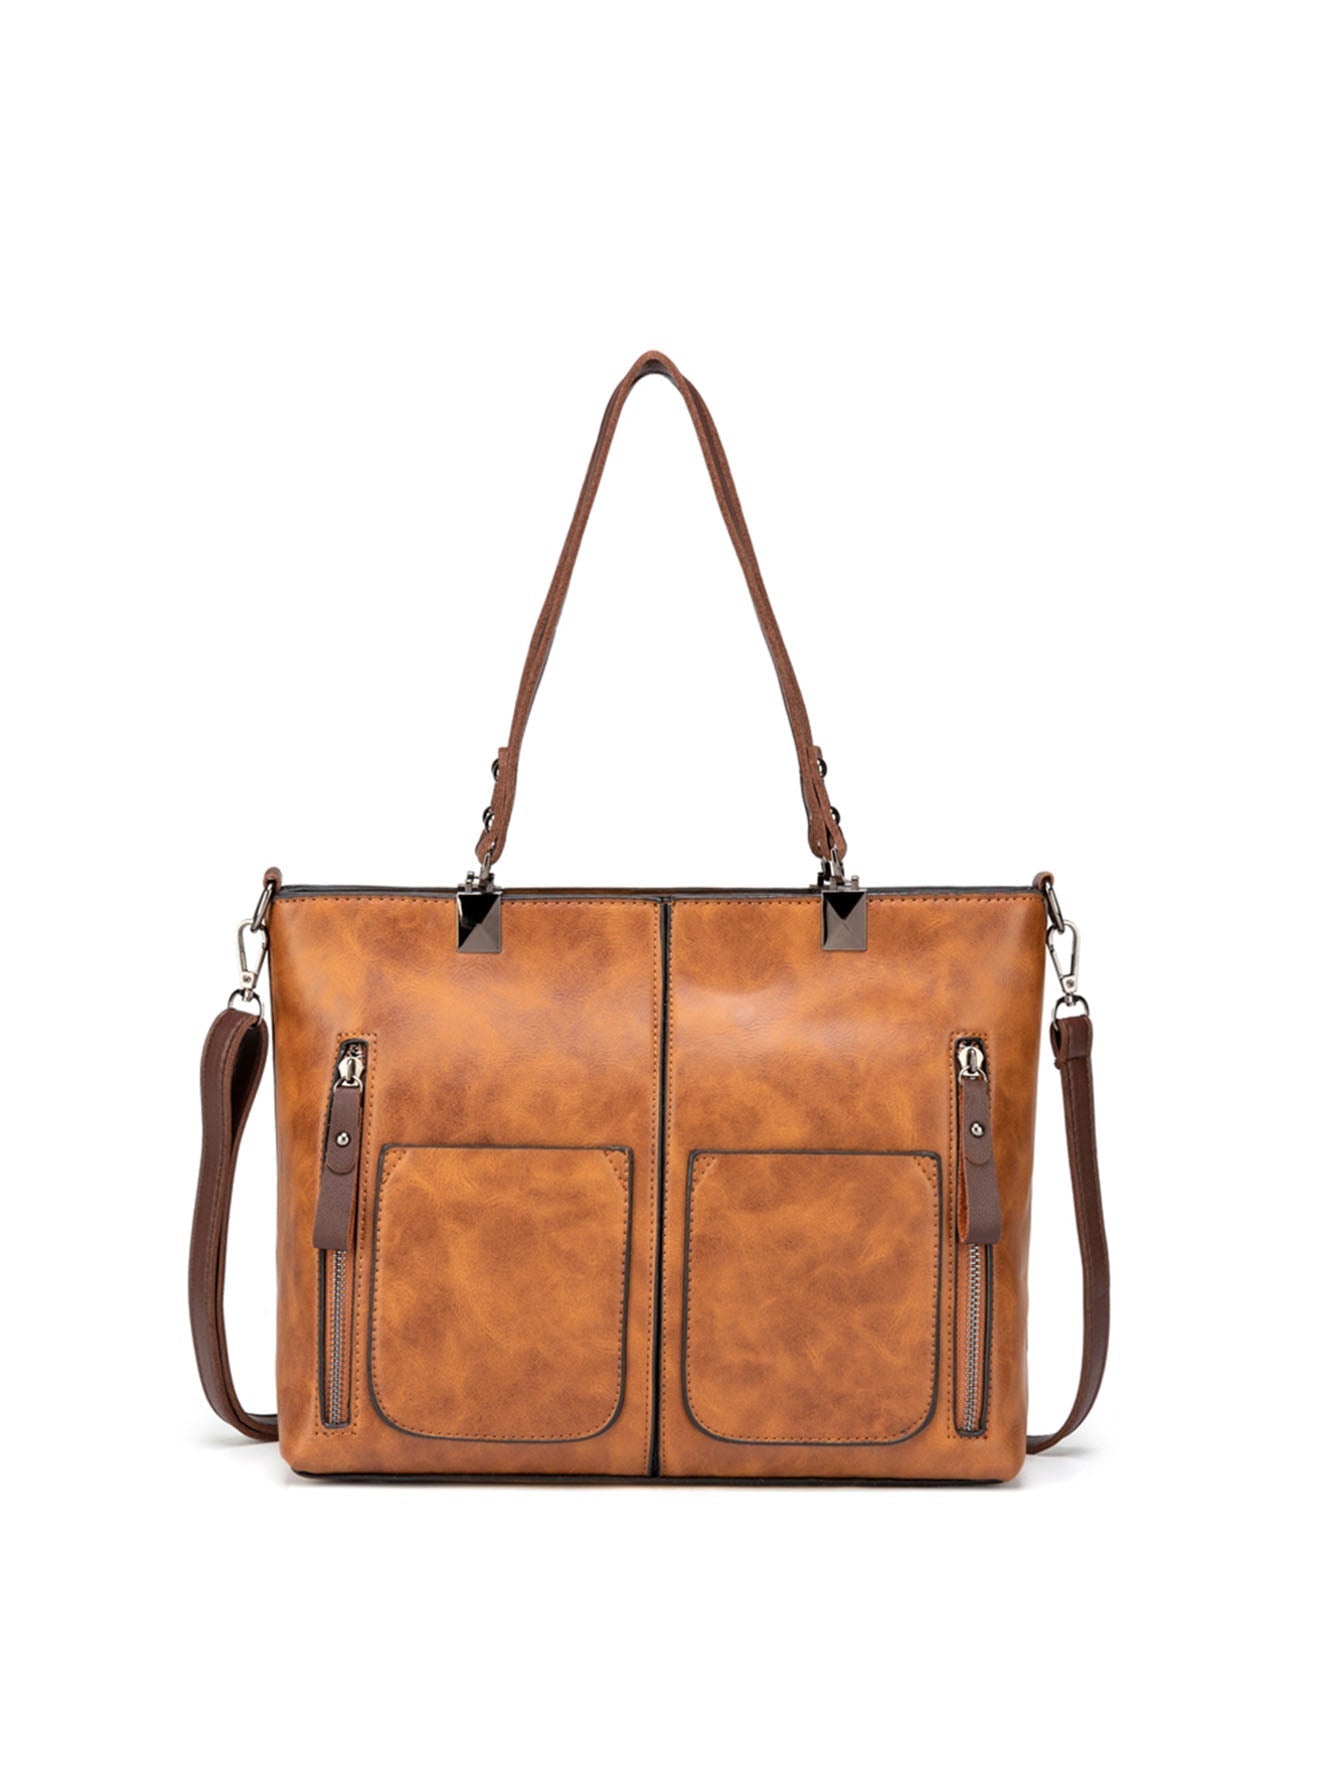 Women Top-handle Bags, Leather Tote Bags Vintage Shoulder Bag Satchel Purse and Handbags Sai Feel